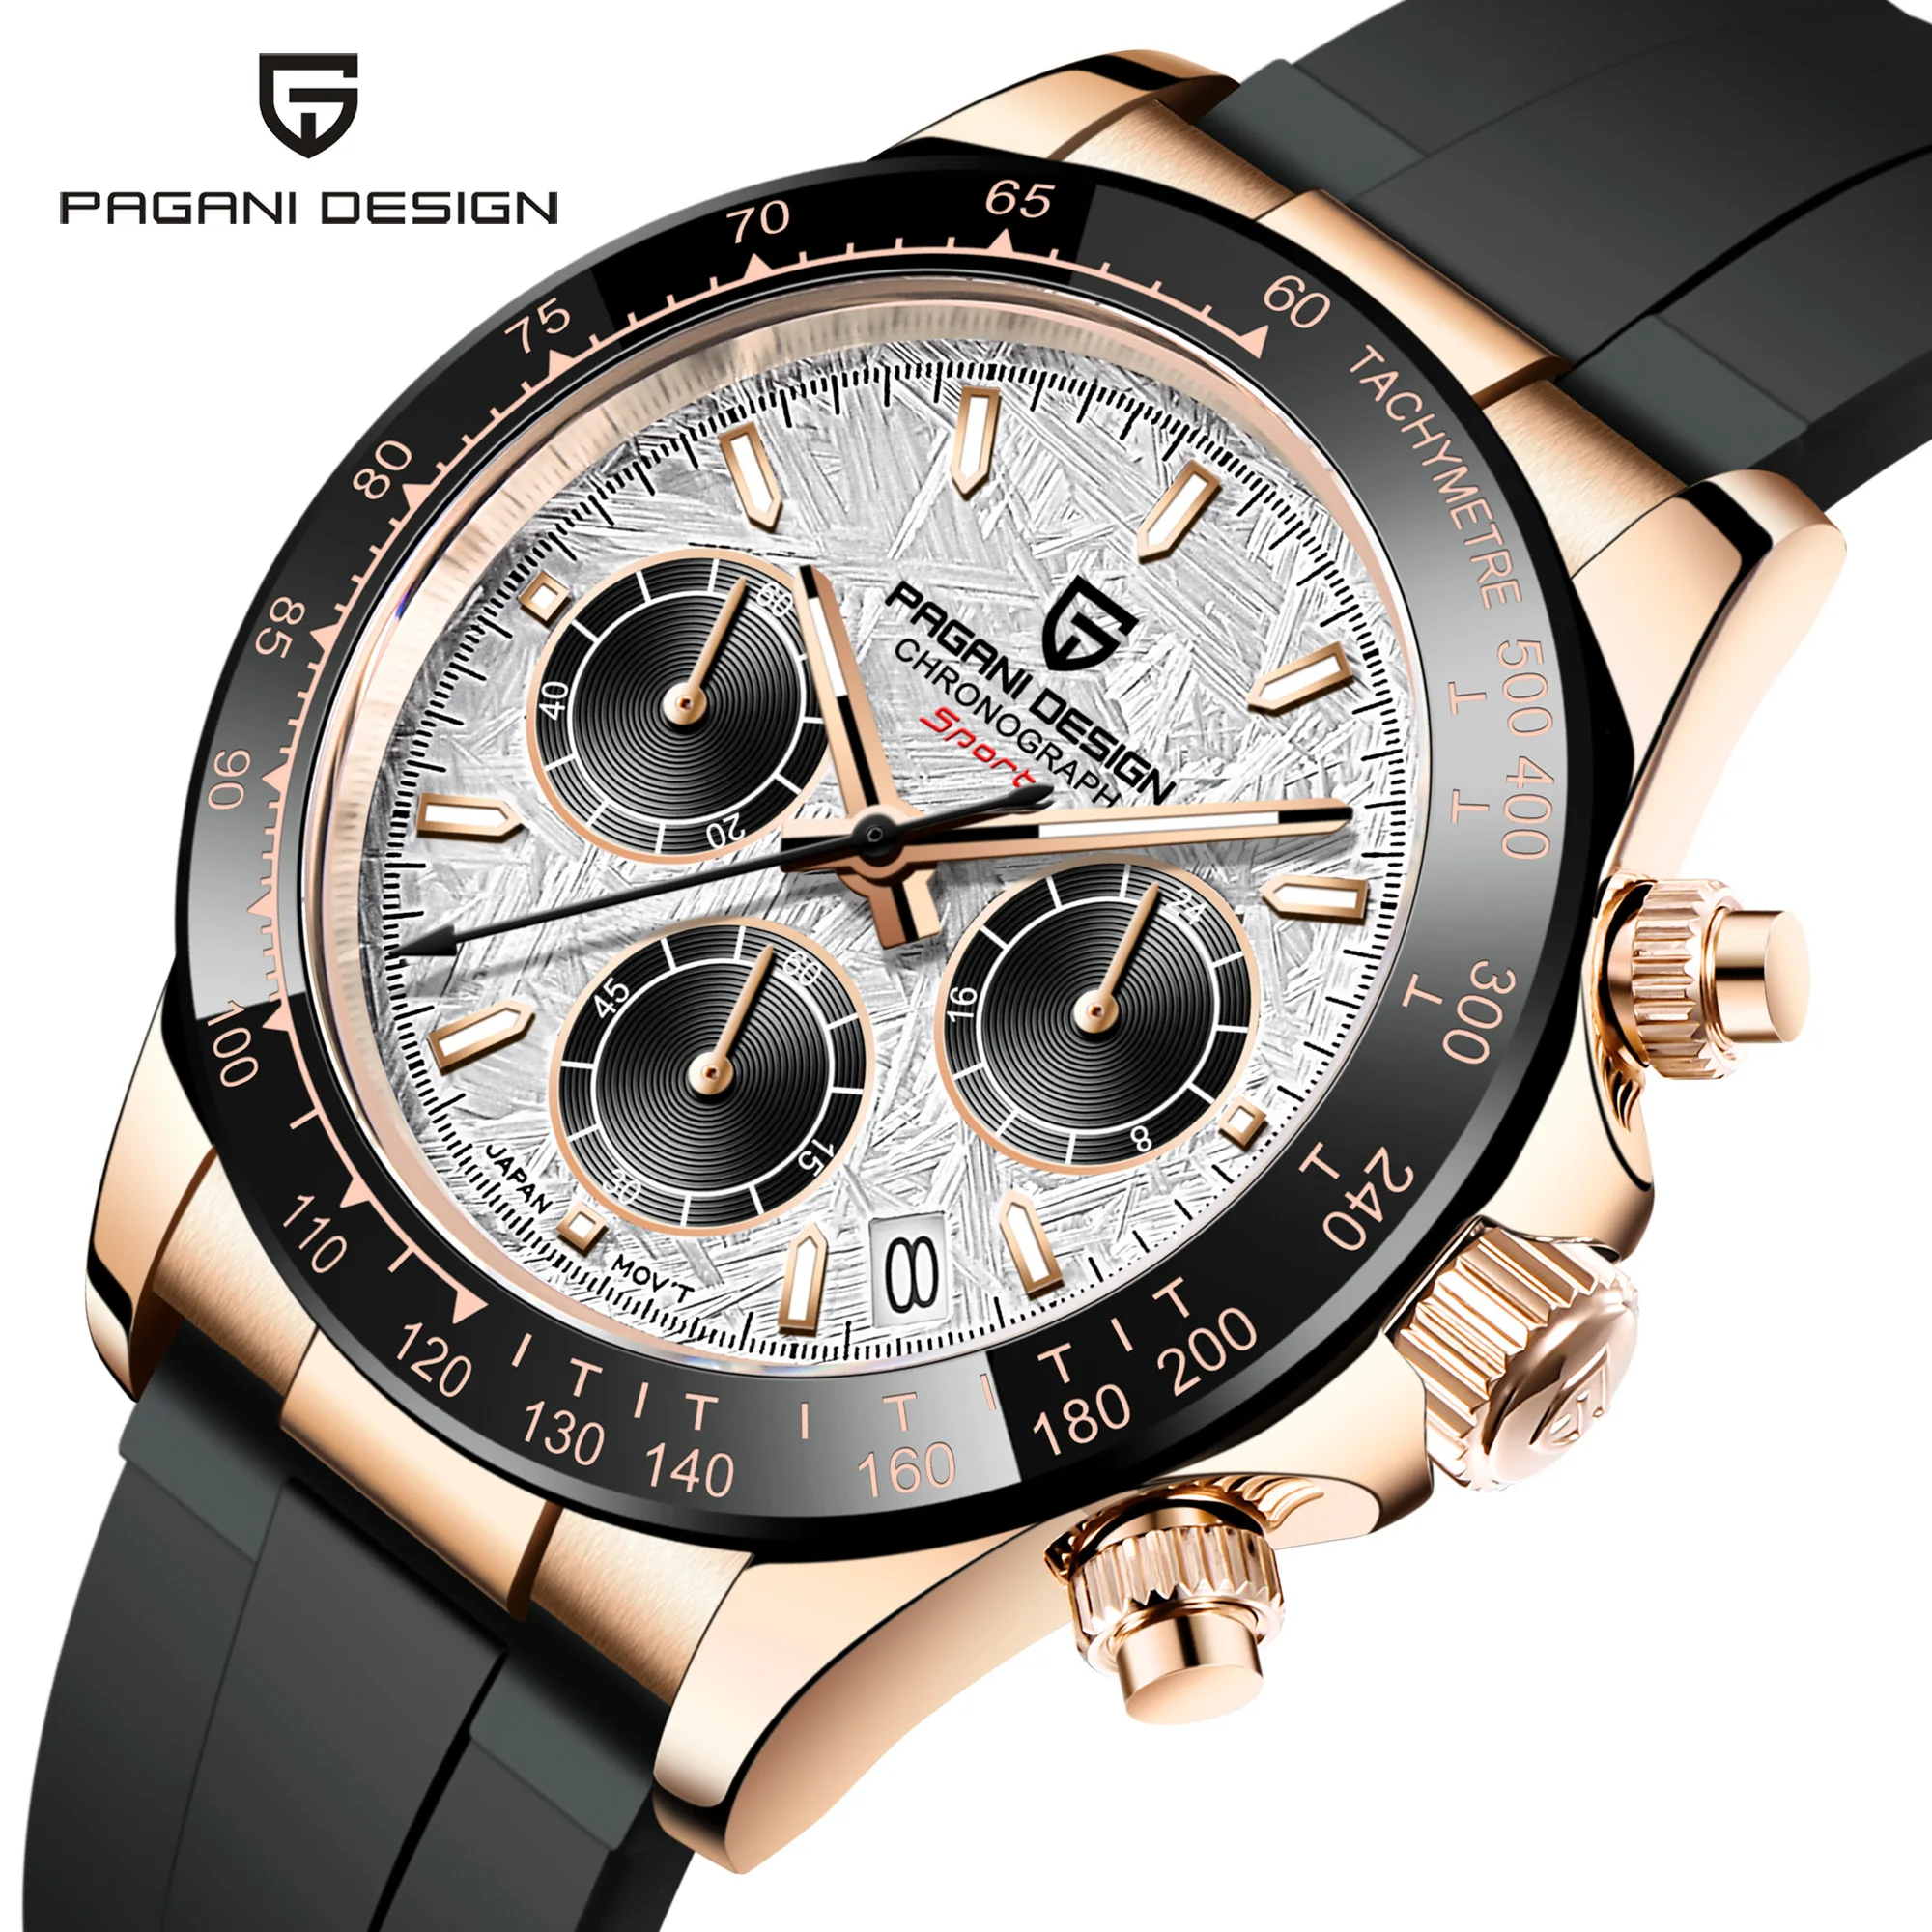 

2021 New PAGANI DESIGN 1664 Men's Watches Top Brand Luxury Wristwatch Quartz Watch for Men Waterproof Chronograph reloj hombre, Shown